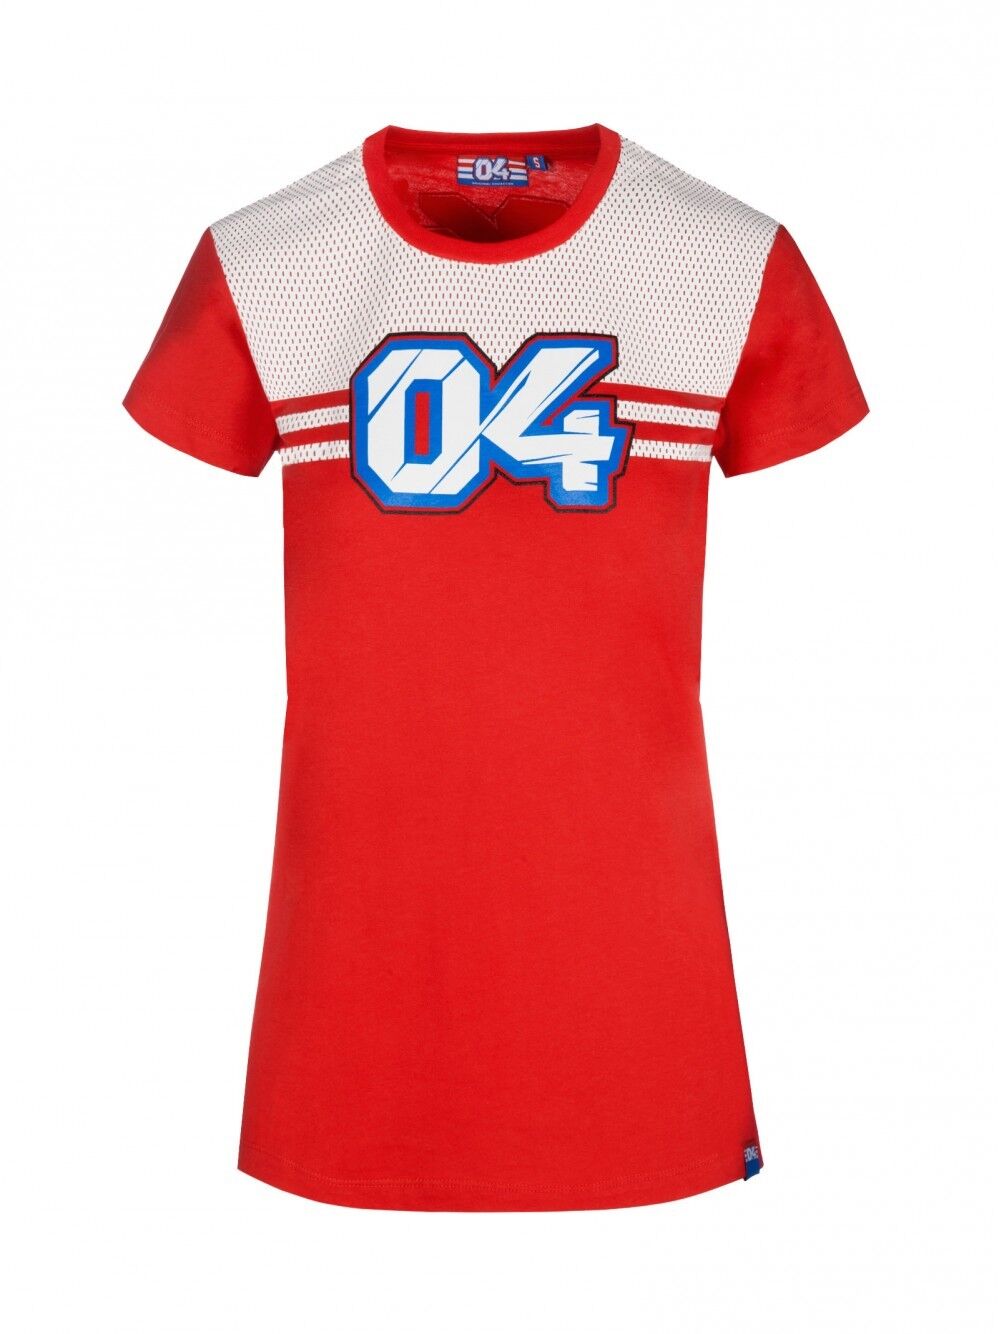 Andrea Dovizioso Woman's Mesh T Shirt - 18 32207